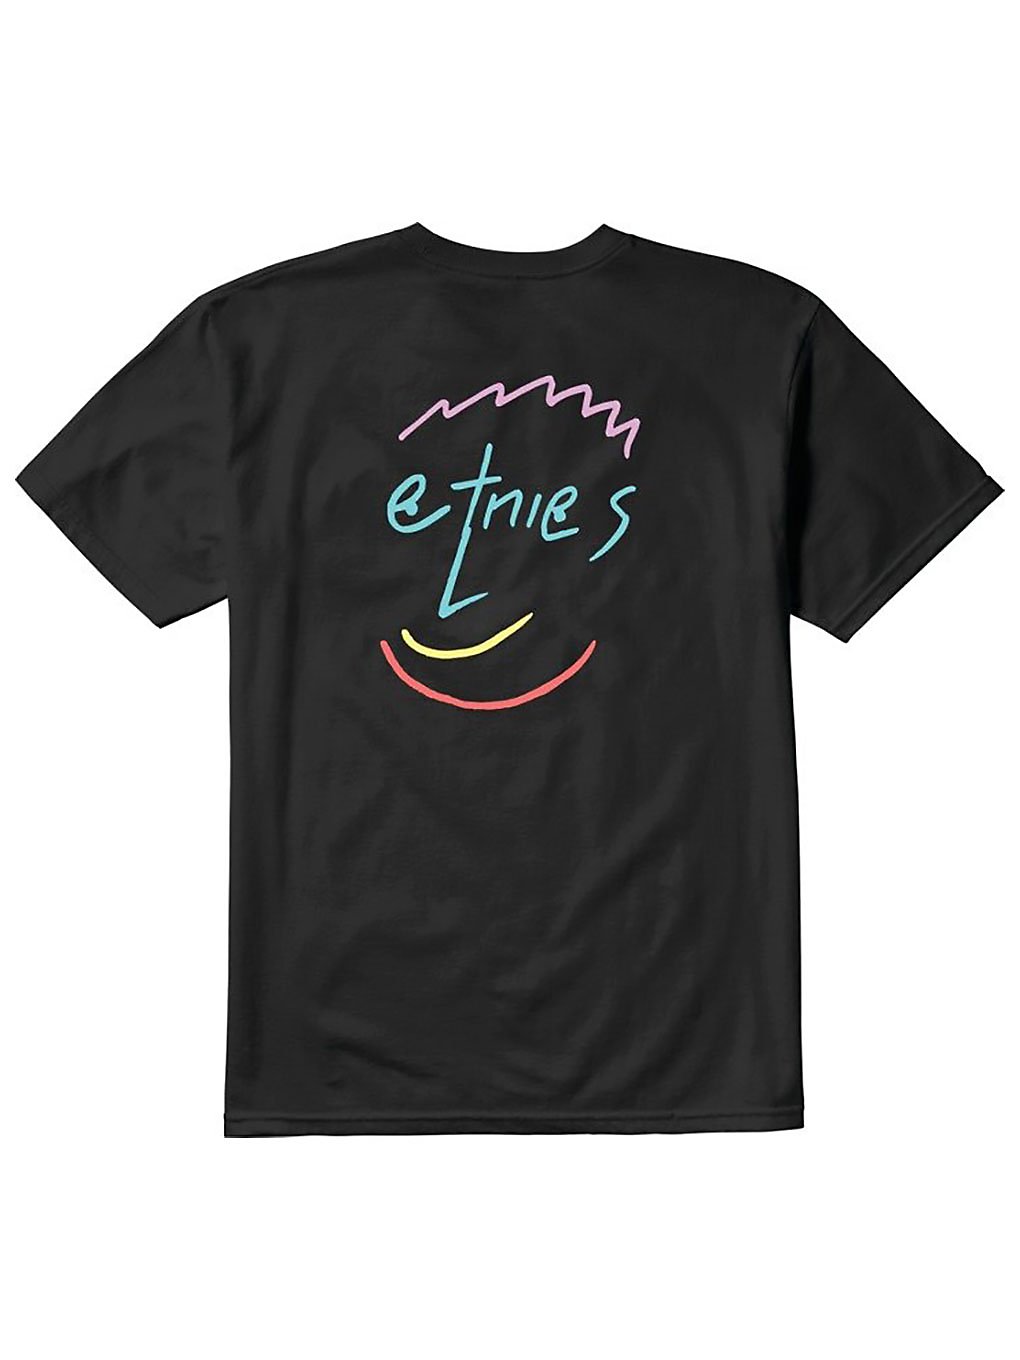 Etnies smile t-shirt musta, etnies